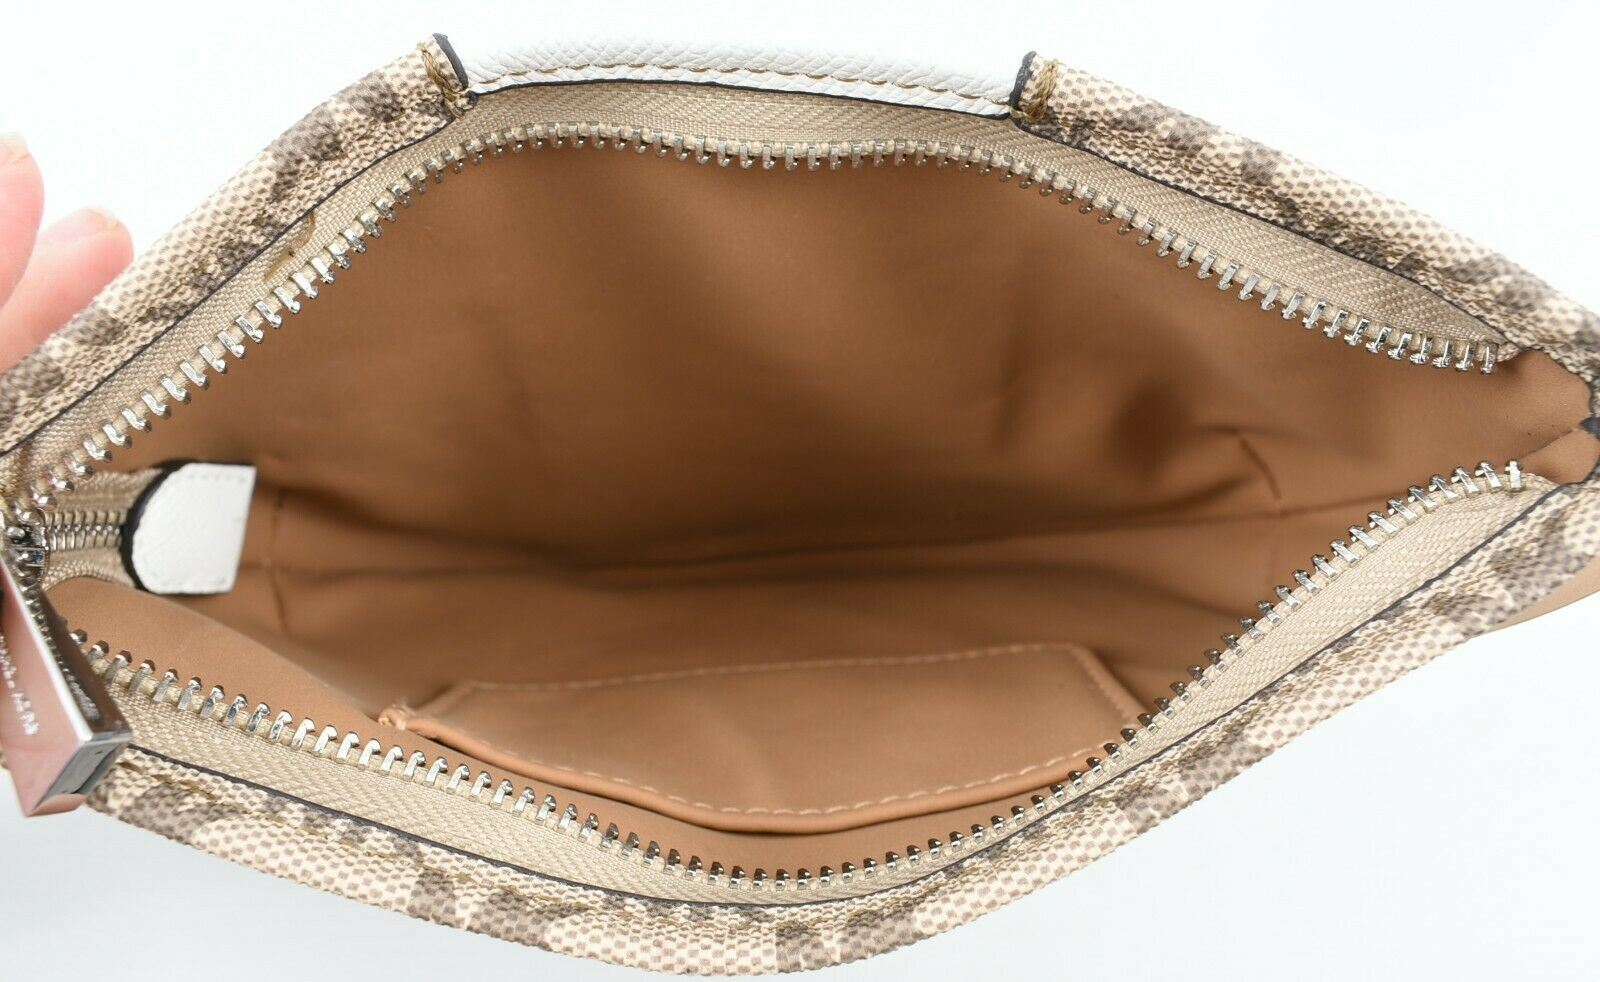 MICHAEL KORS Women's Monogram Print Bum Bag, Khaki/White, belt size S to size M